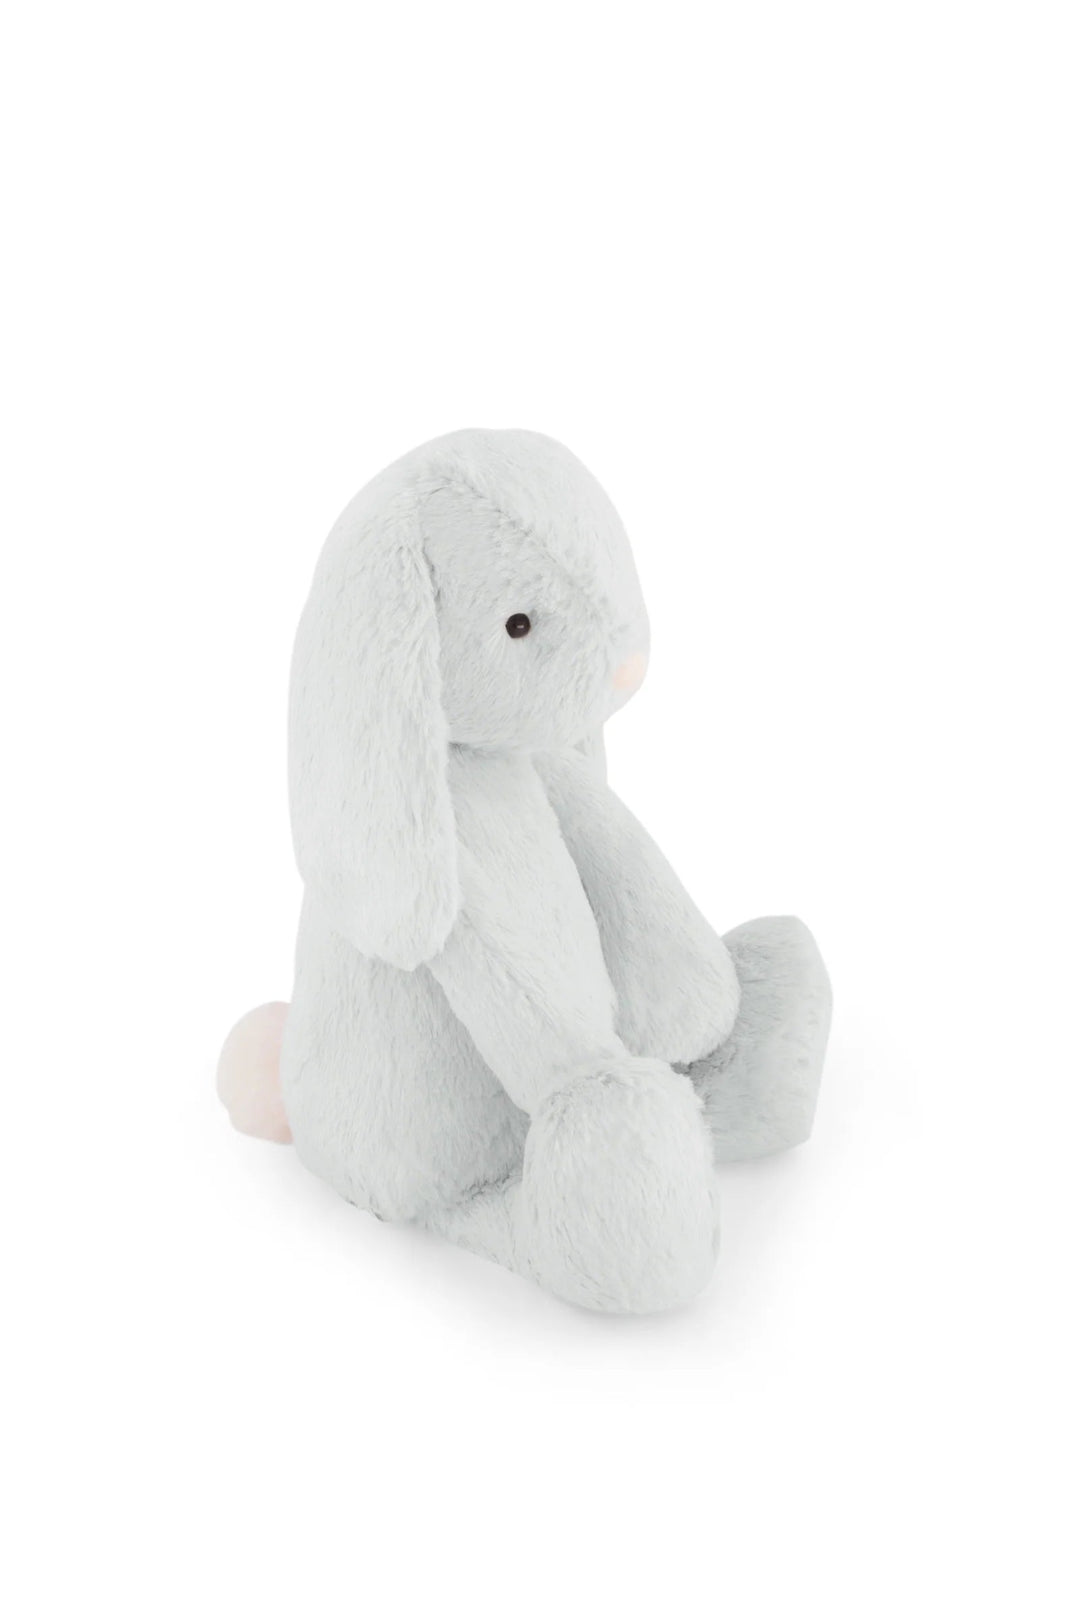 NEW Jamie Kay Snuggle Bunnies - Penelope The Bunny - Moonbeam - #HolaNanu#NDIS #creativekids